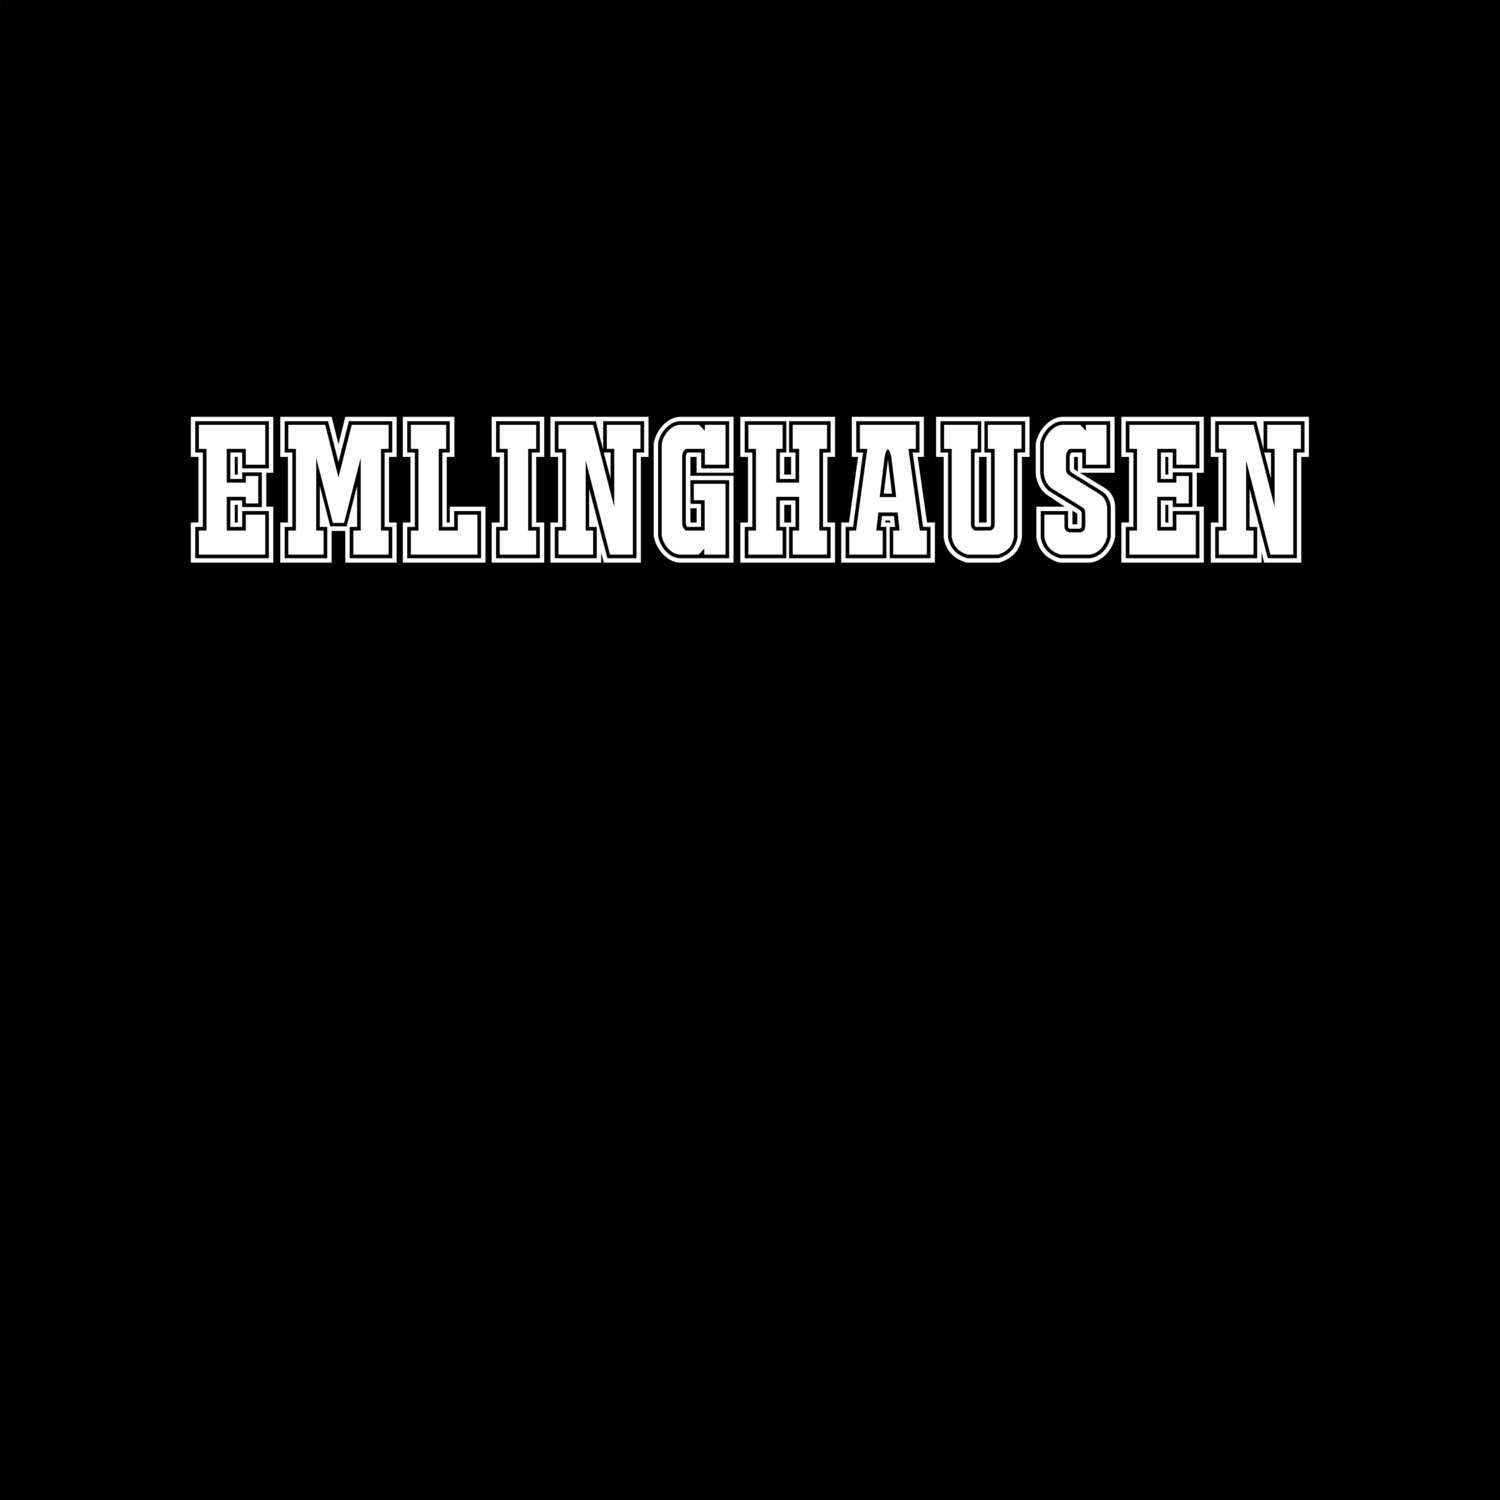 Emlinghausen T-Shirt »Classic«